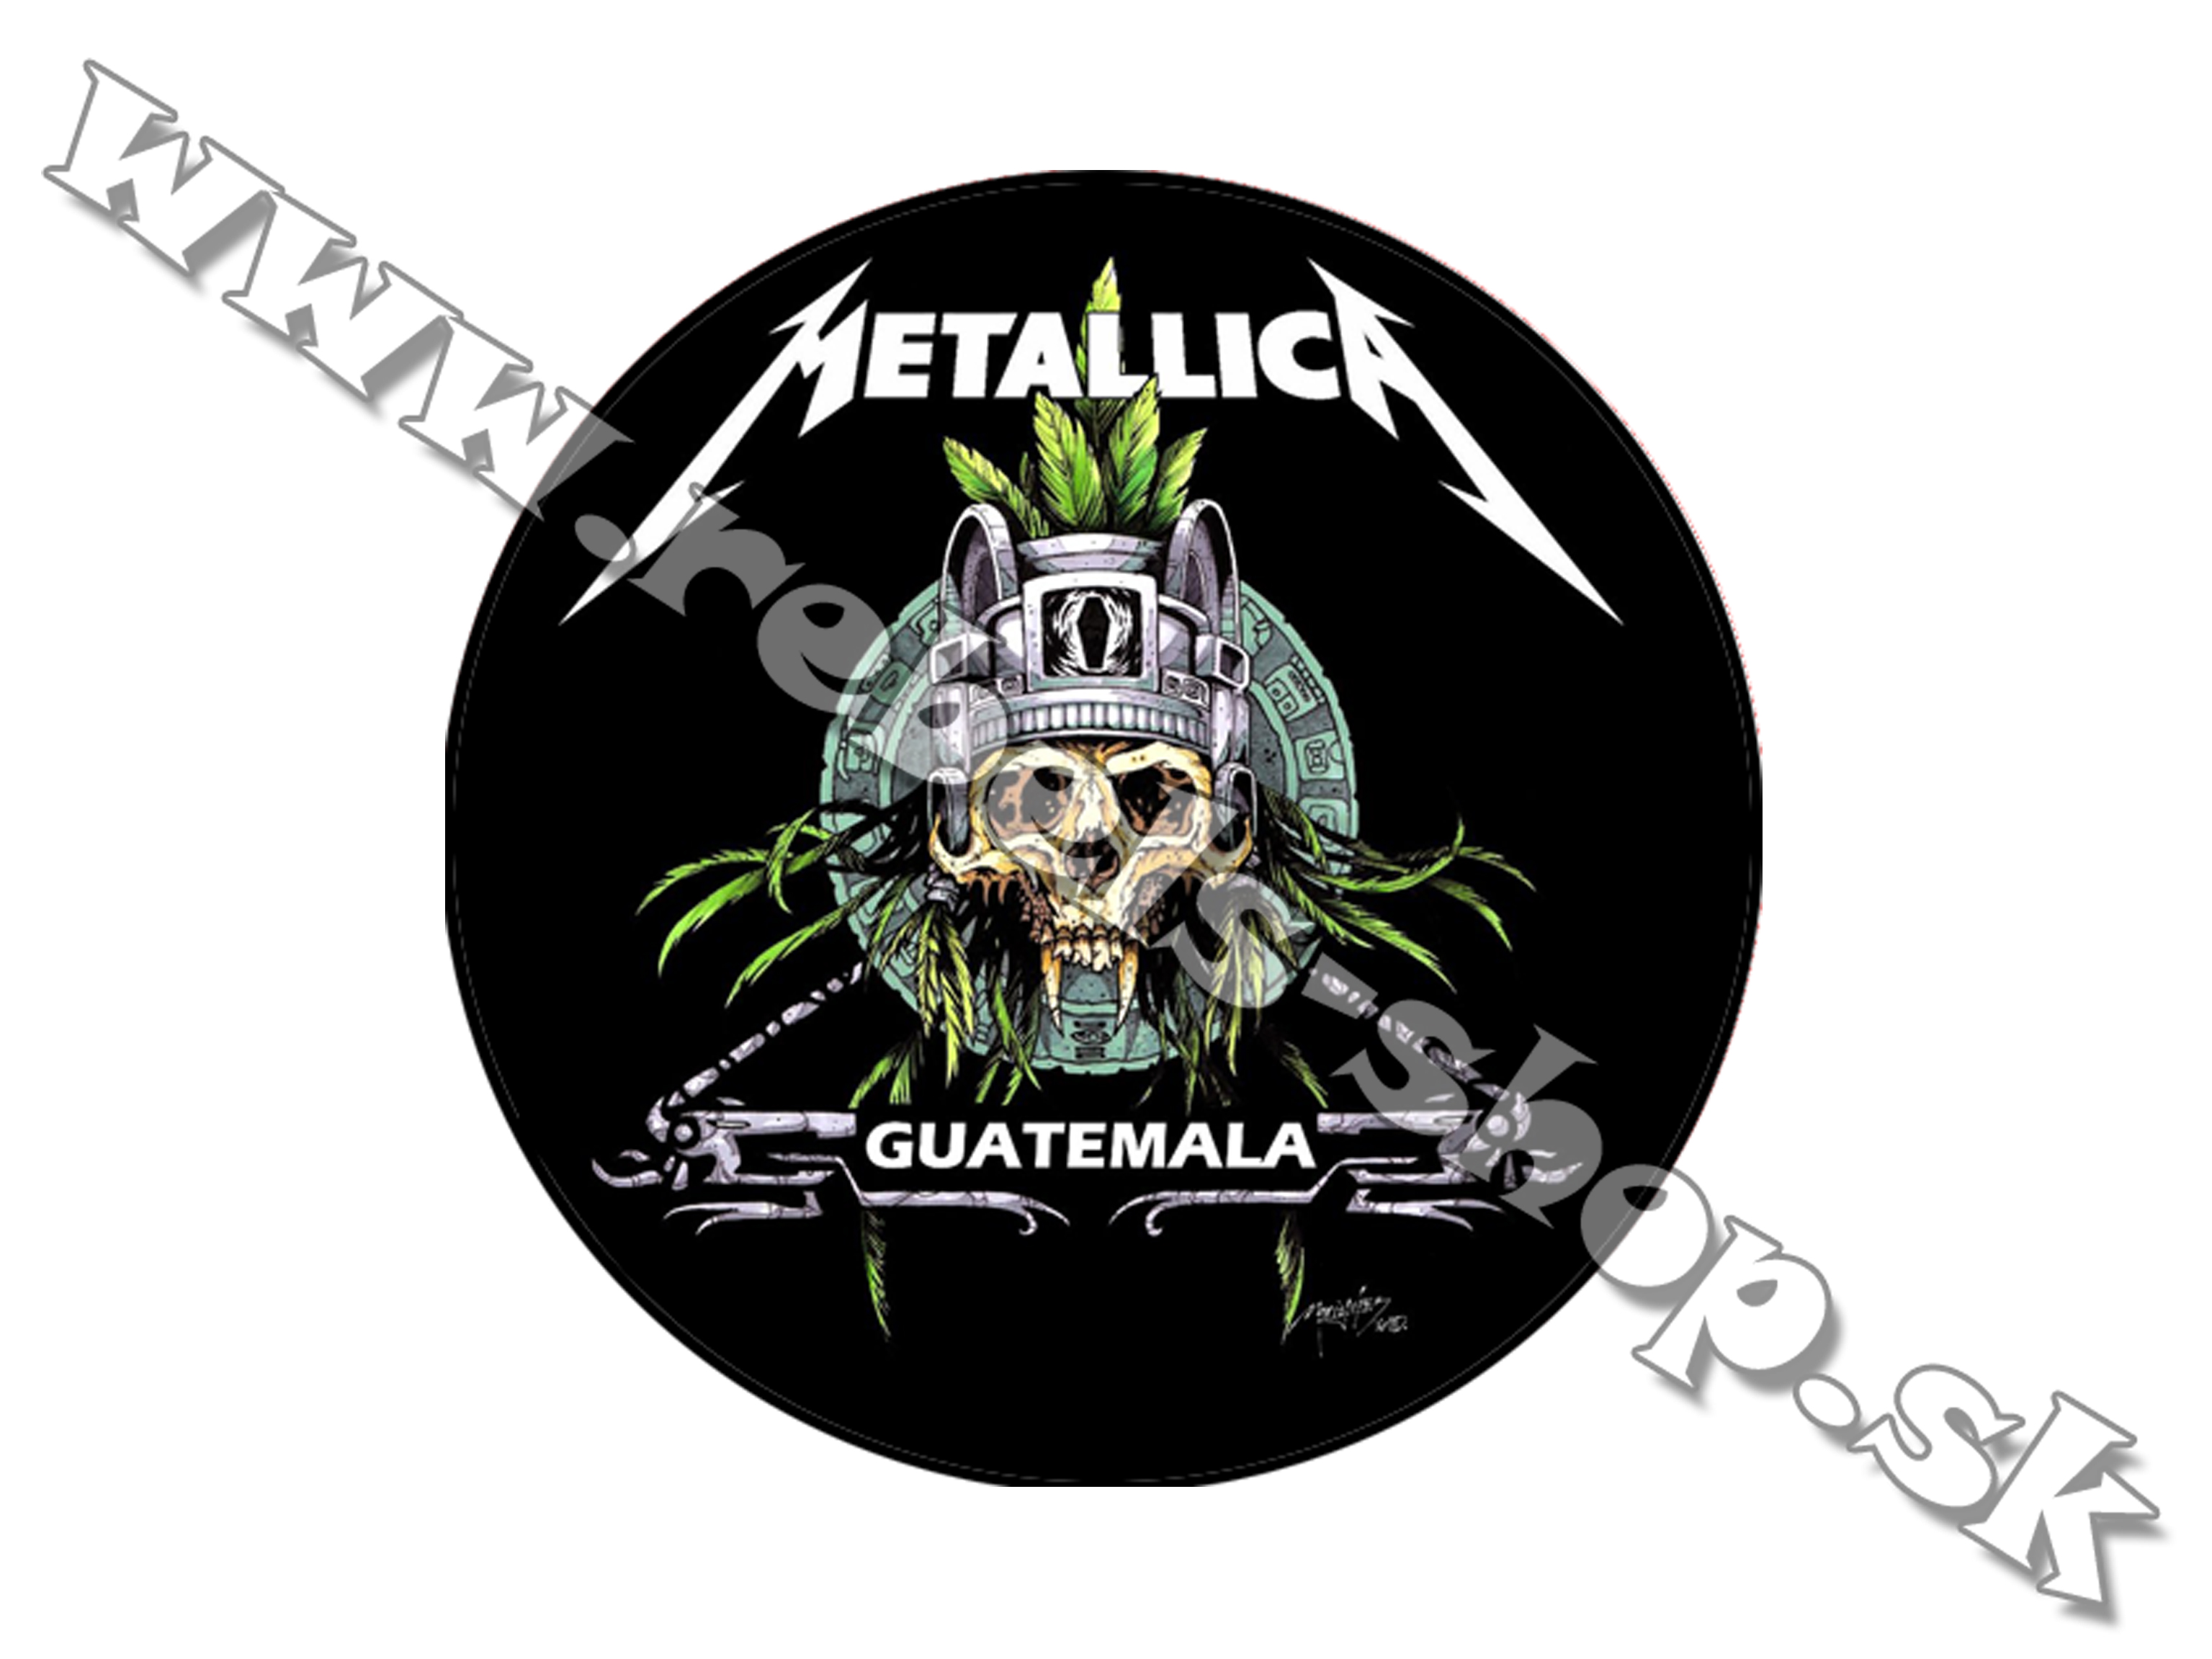 Odznak "Metallica"